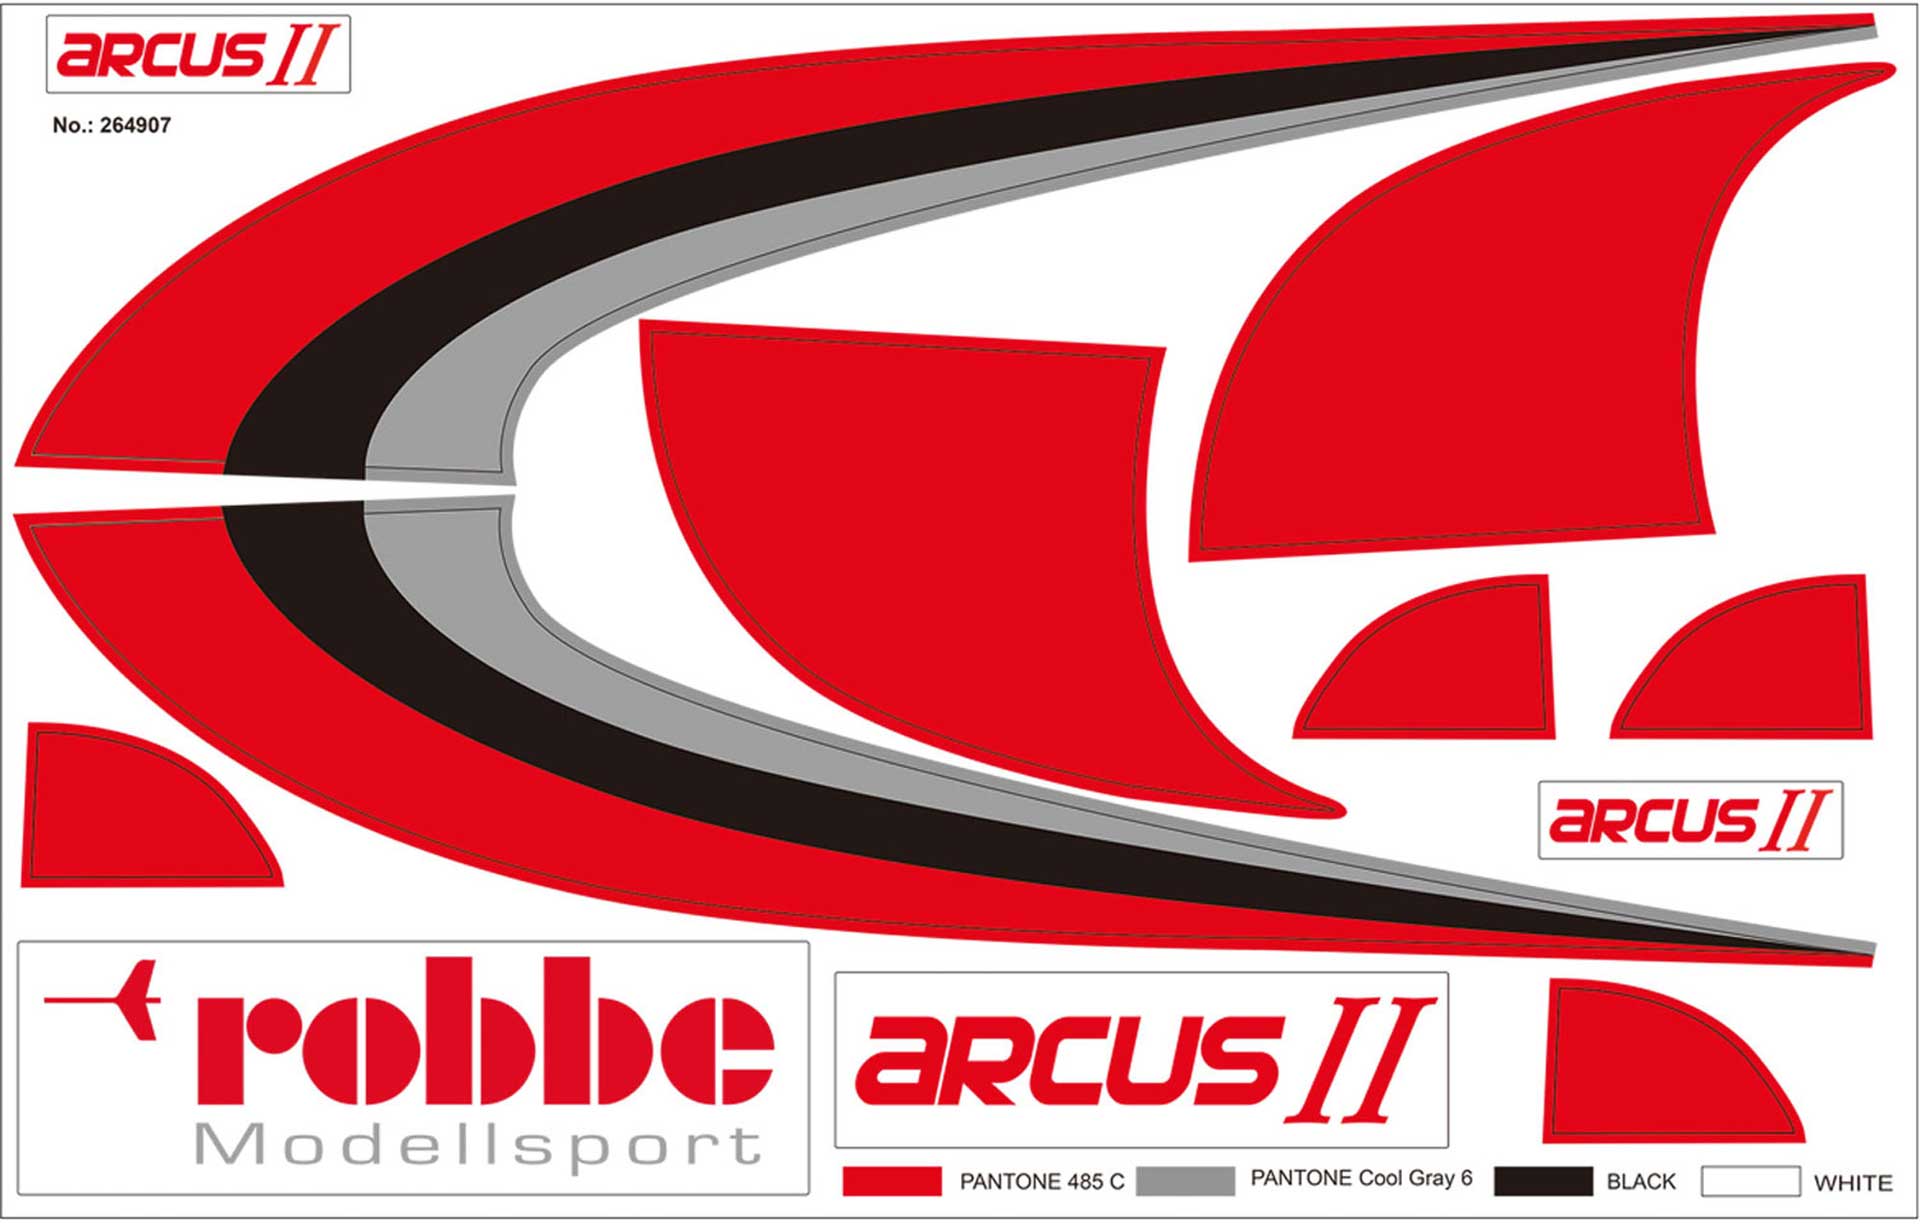 Robbe Modellsport ARCUS II PNP